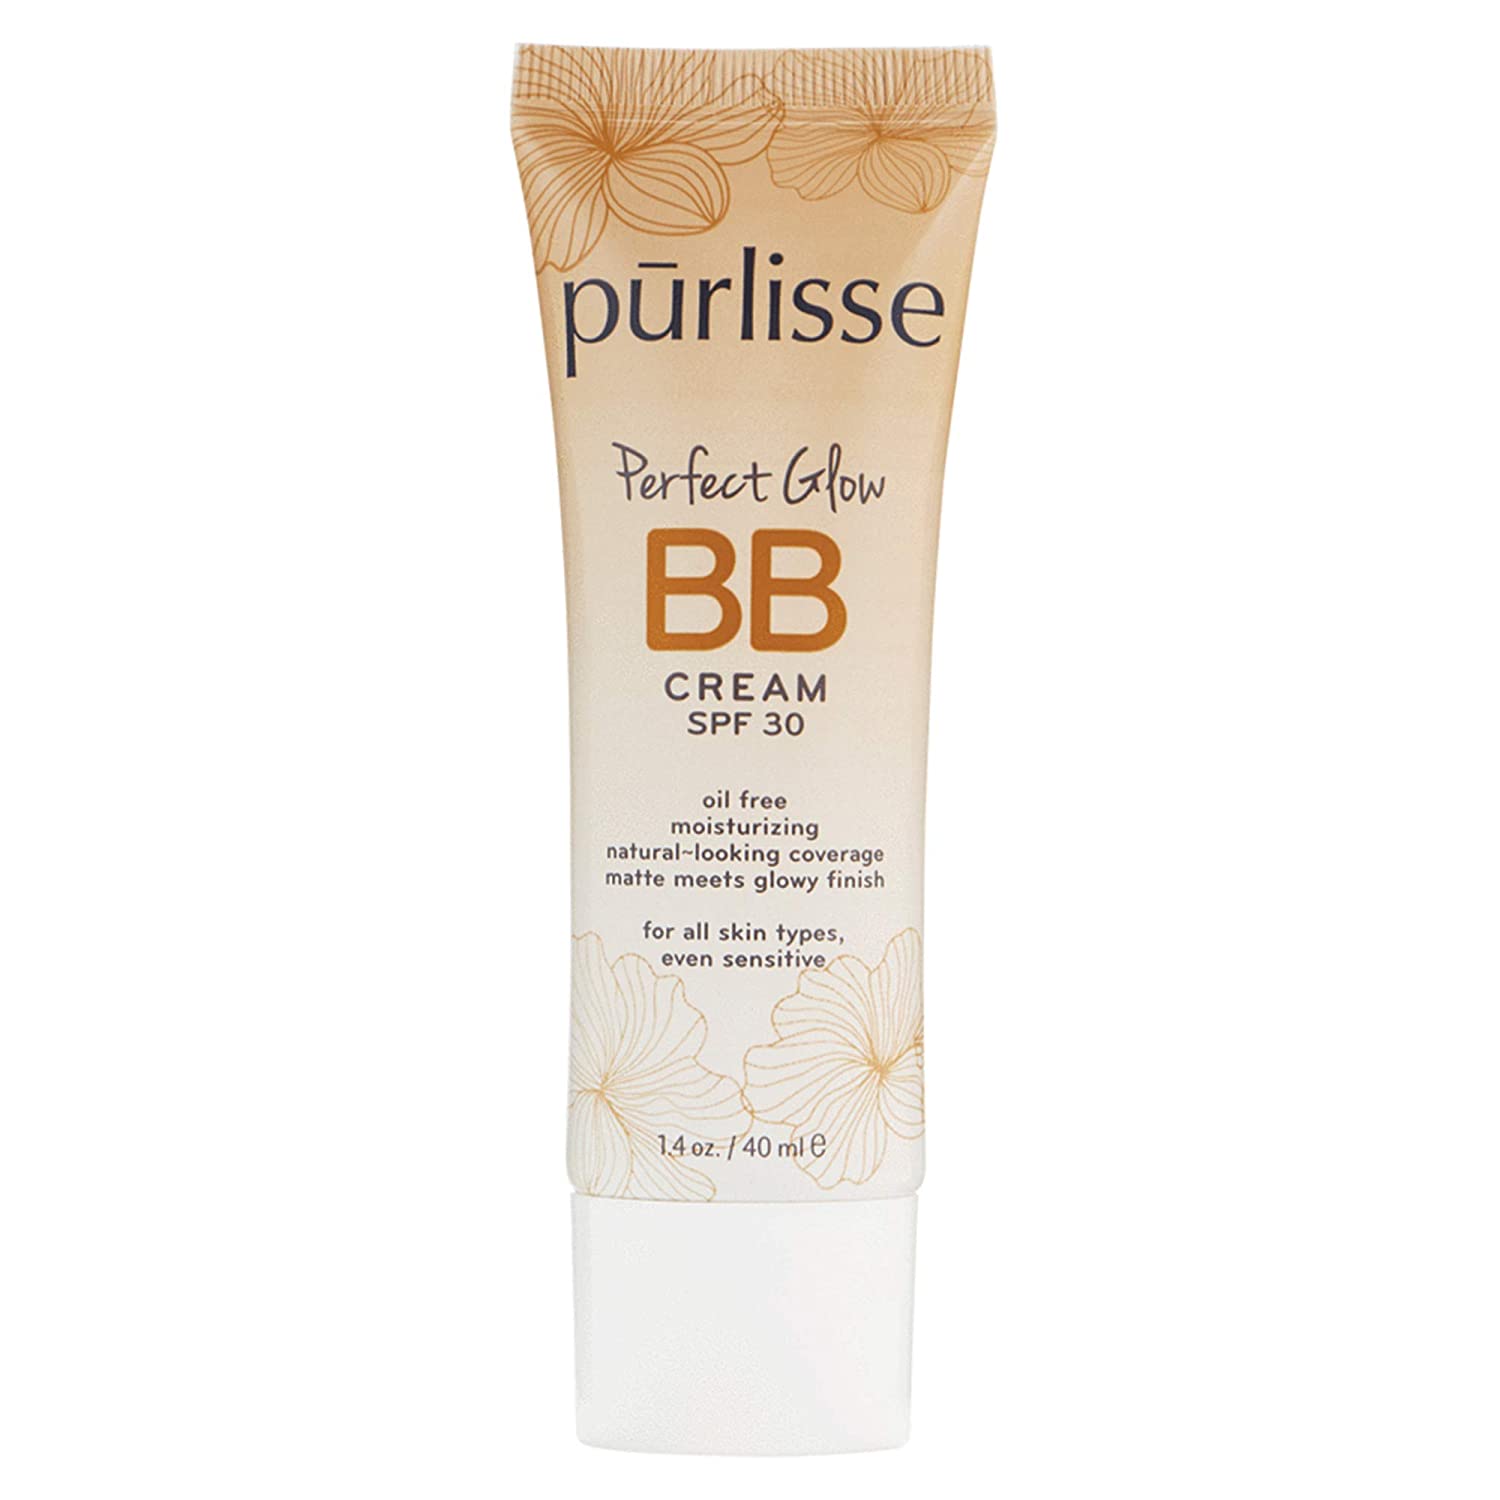 purlisse BB Tinted Moisturizer Cream SPF 30 -Best BB Cream for All Skin Types